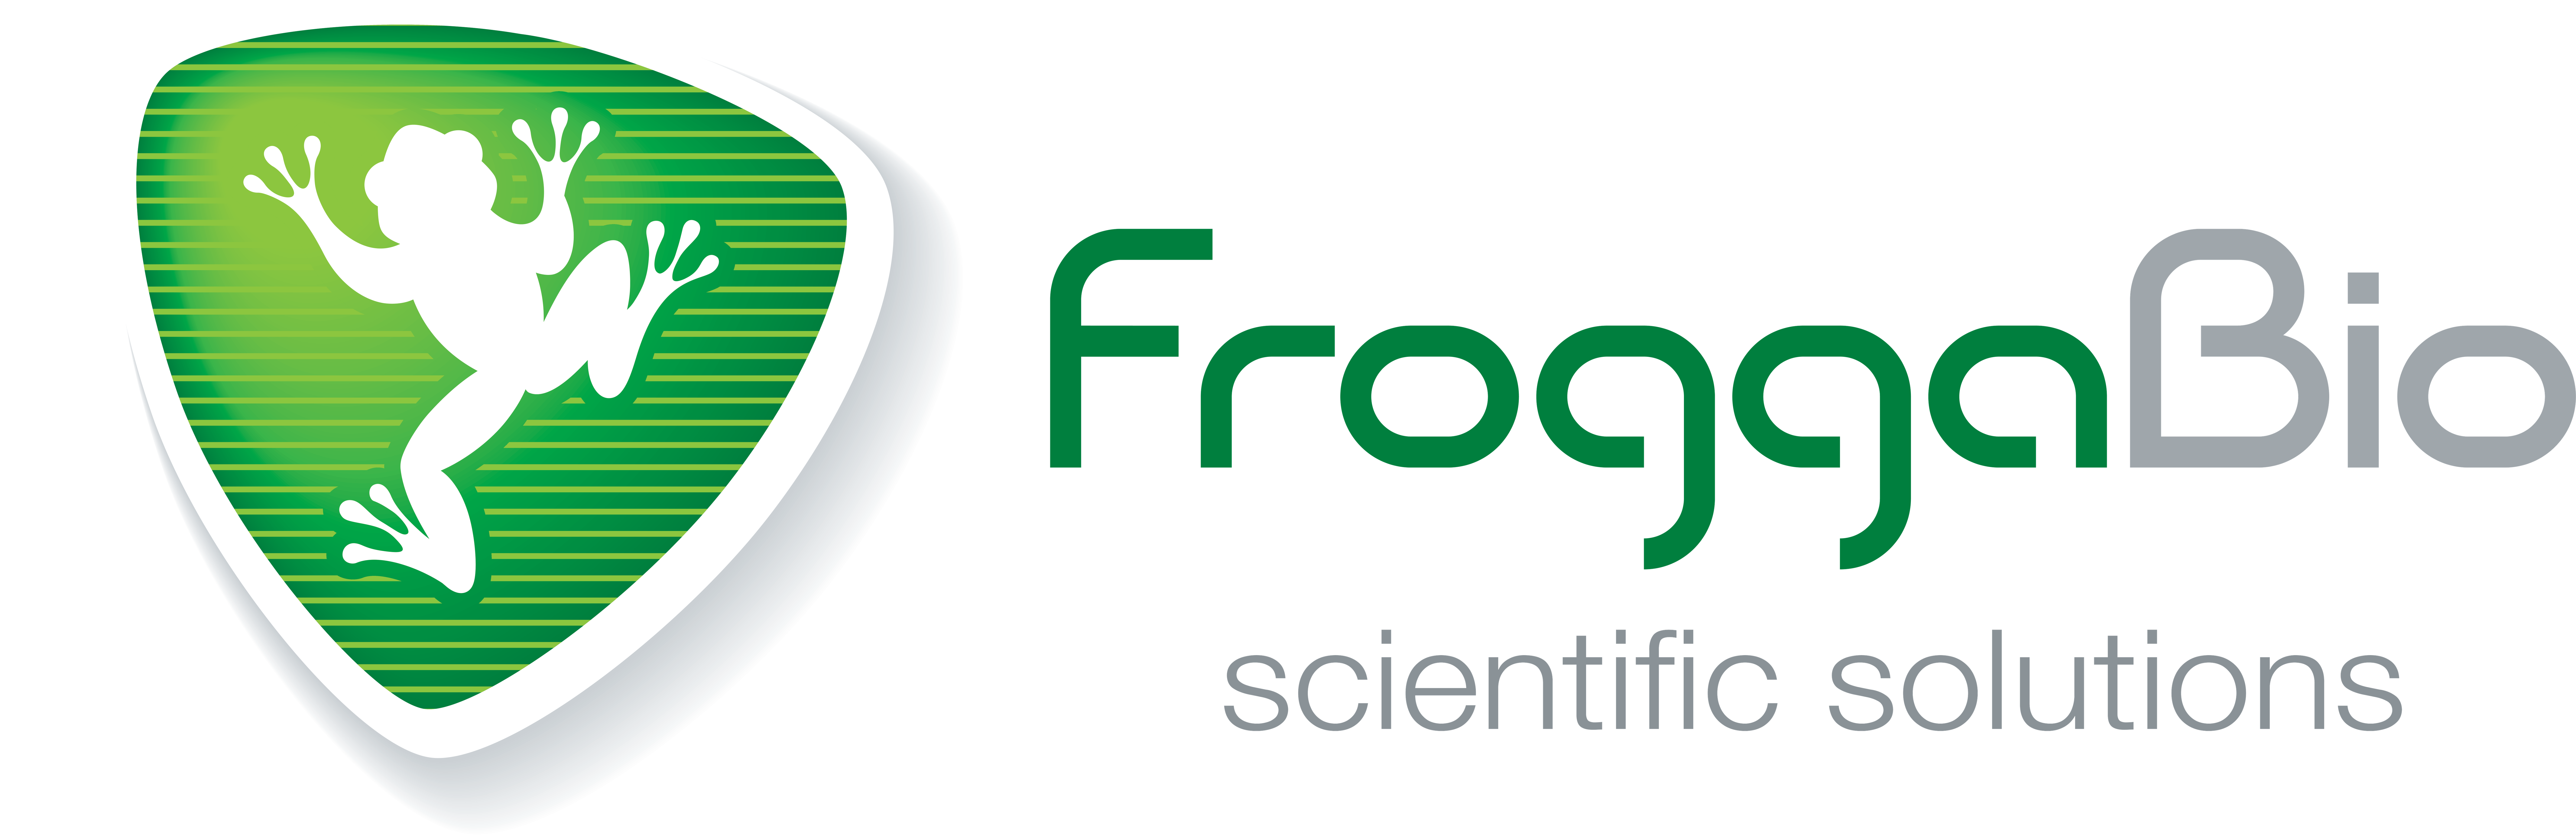 FroggaBio Logo